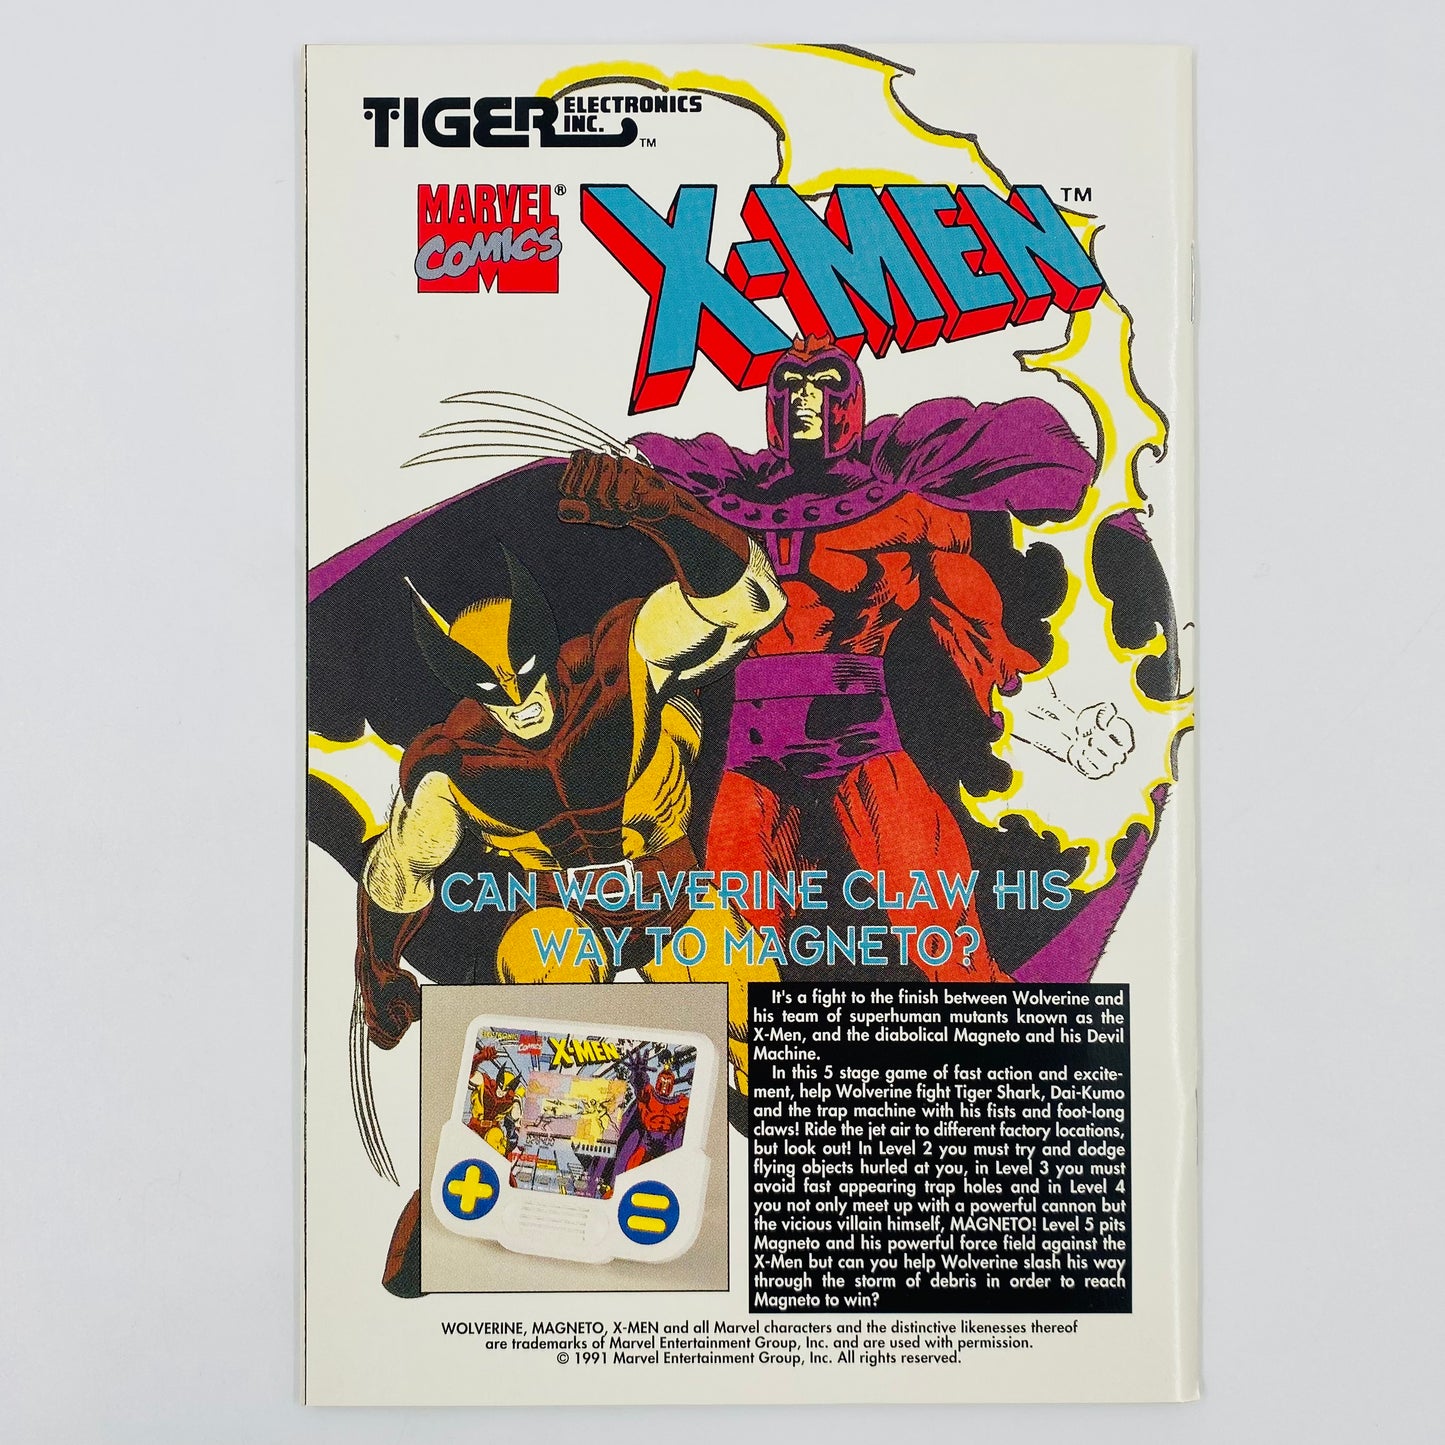 Wolverine #50 “Shiva Scenario” phase 3 of 3 (1992) Marvel